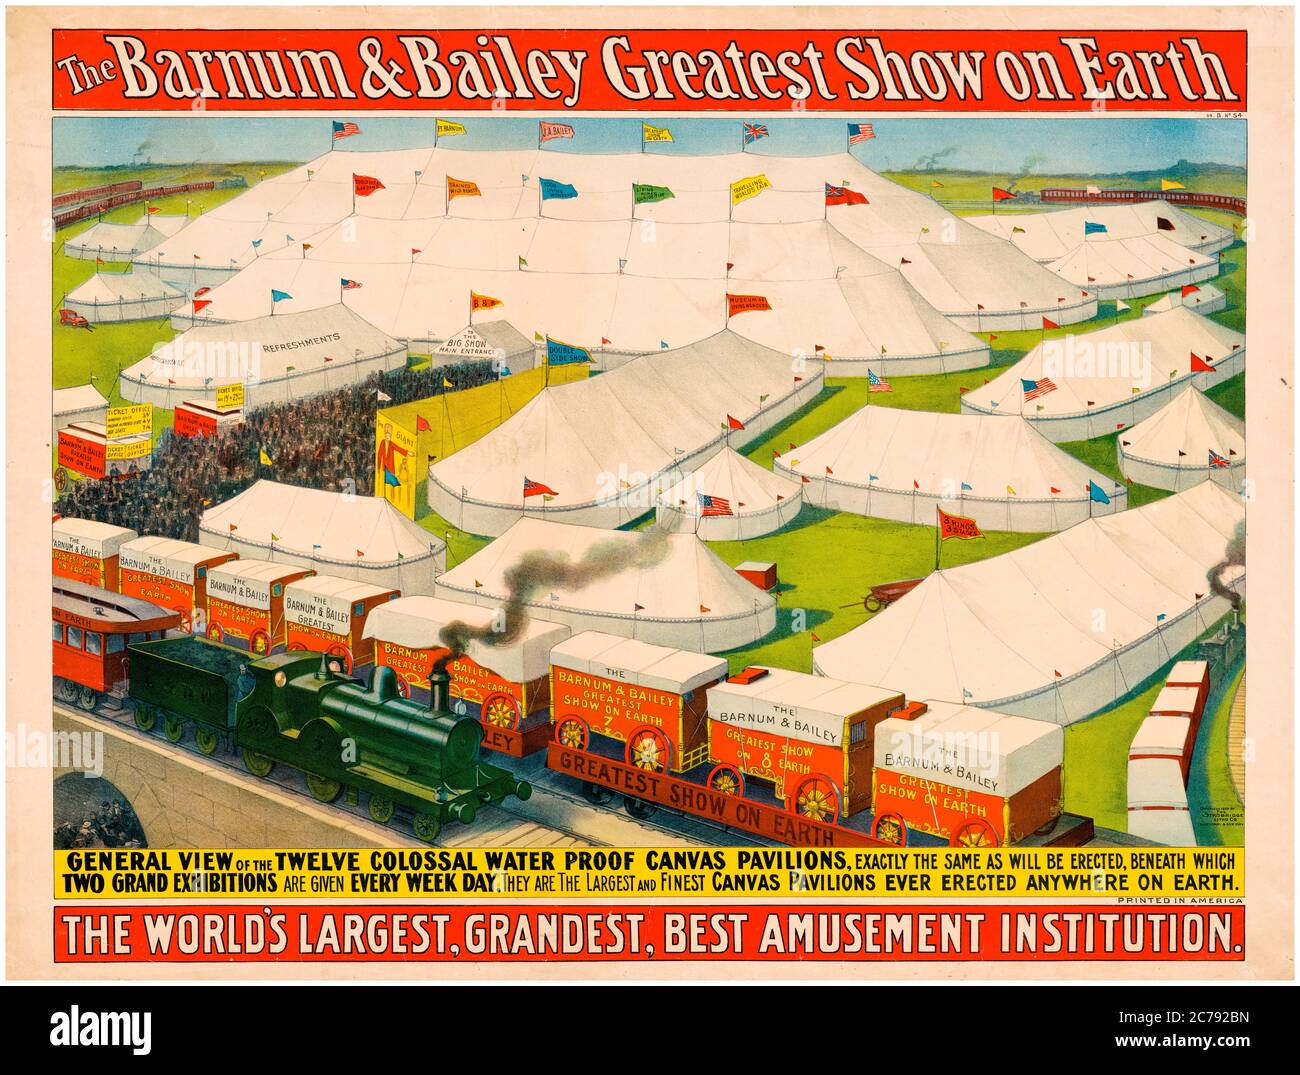 The Barnum & Bailey Greatest Show on Earth circus poster, circa 1899 Stock Photo